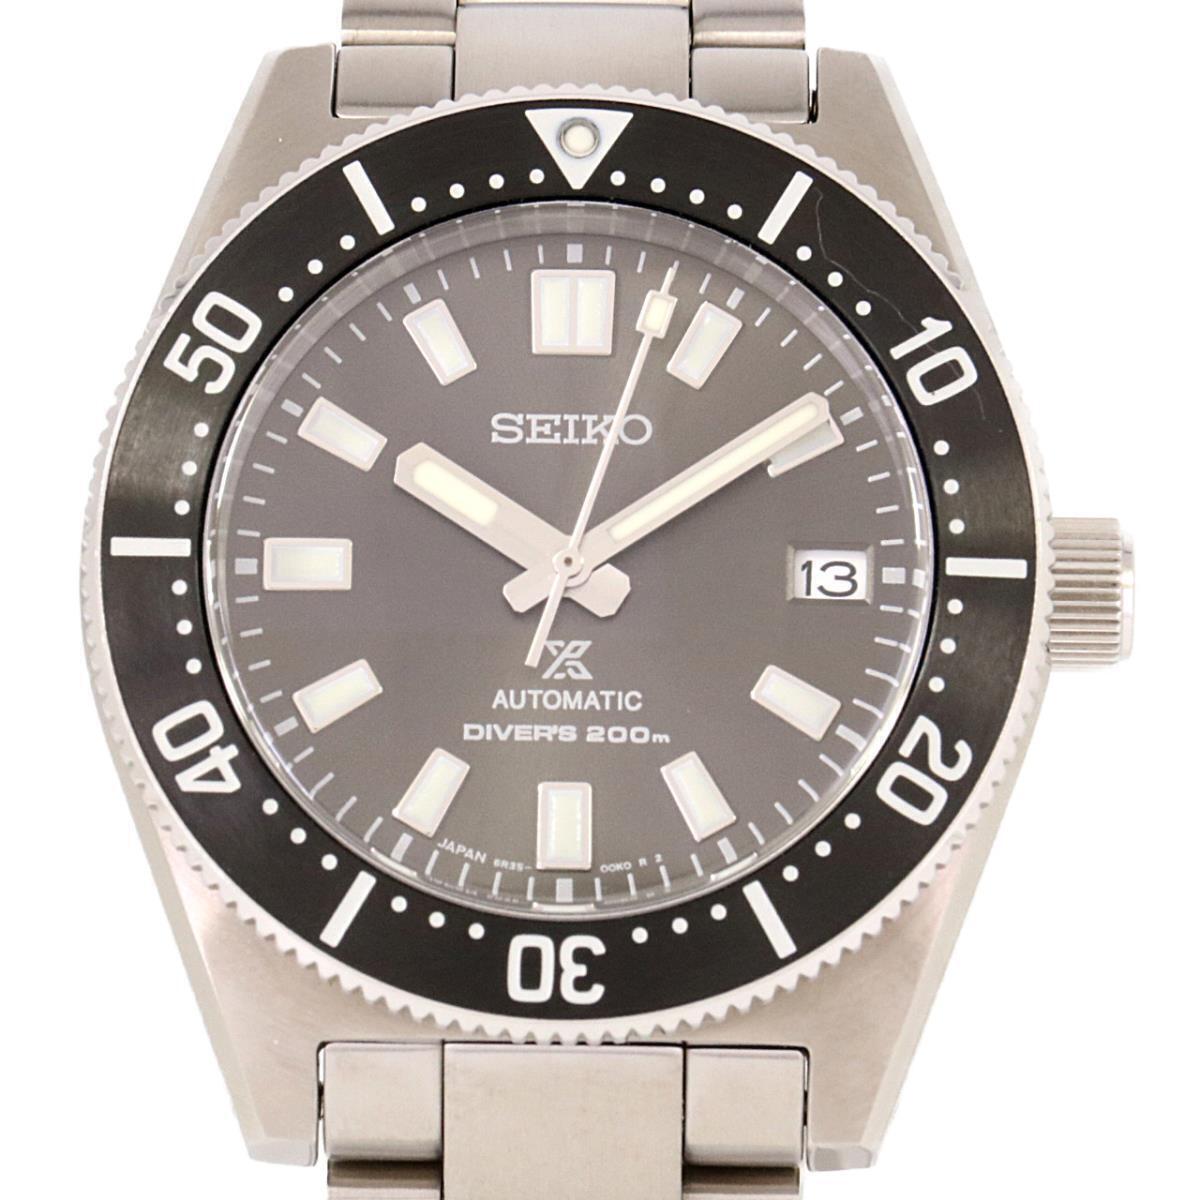 Seiko Prospex Men's Black Watch - SBDC101 for sale online | eBay